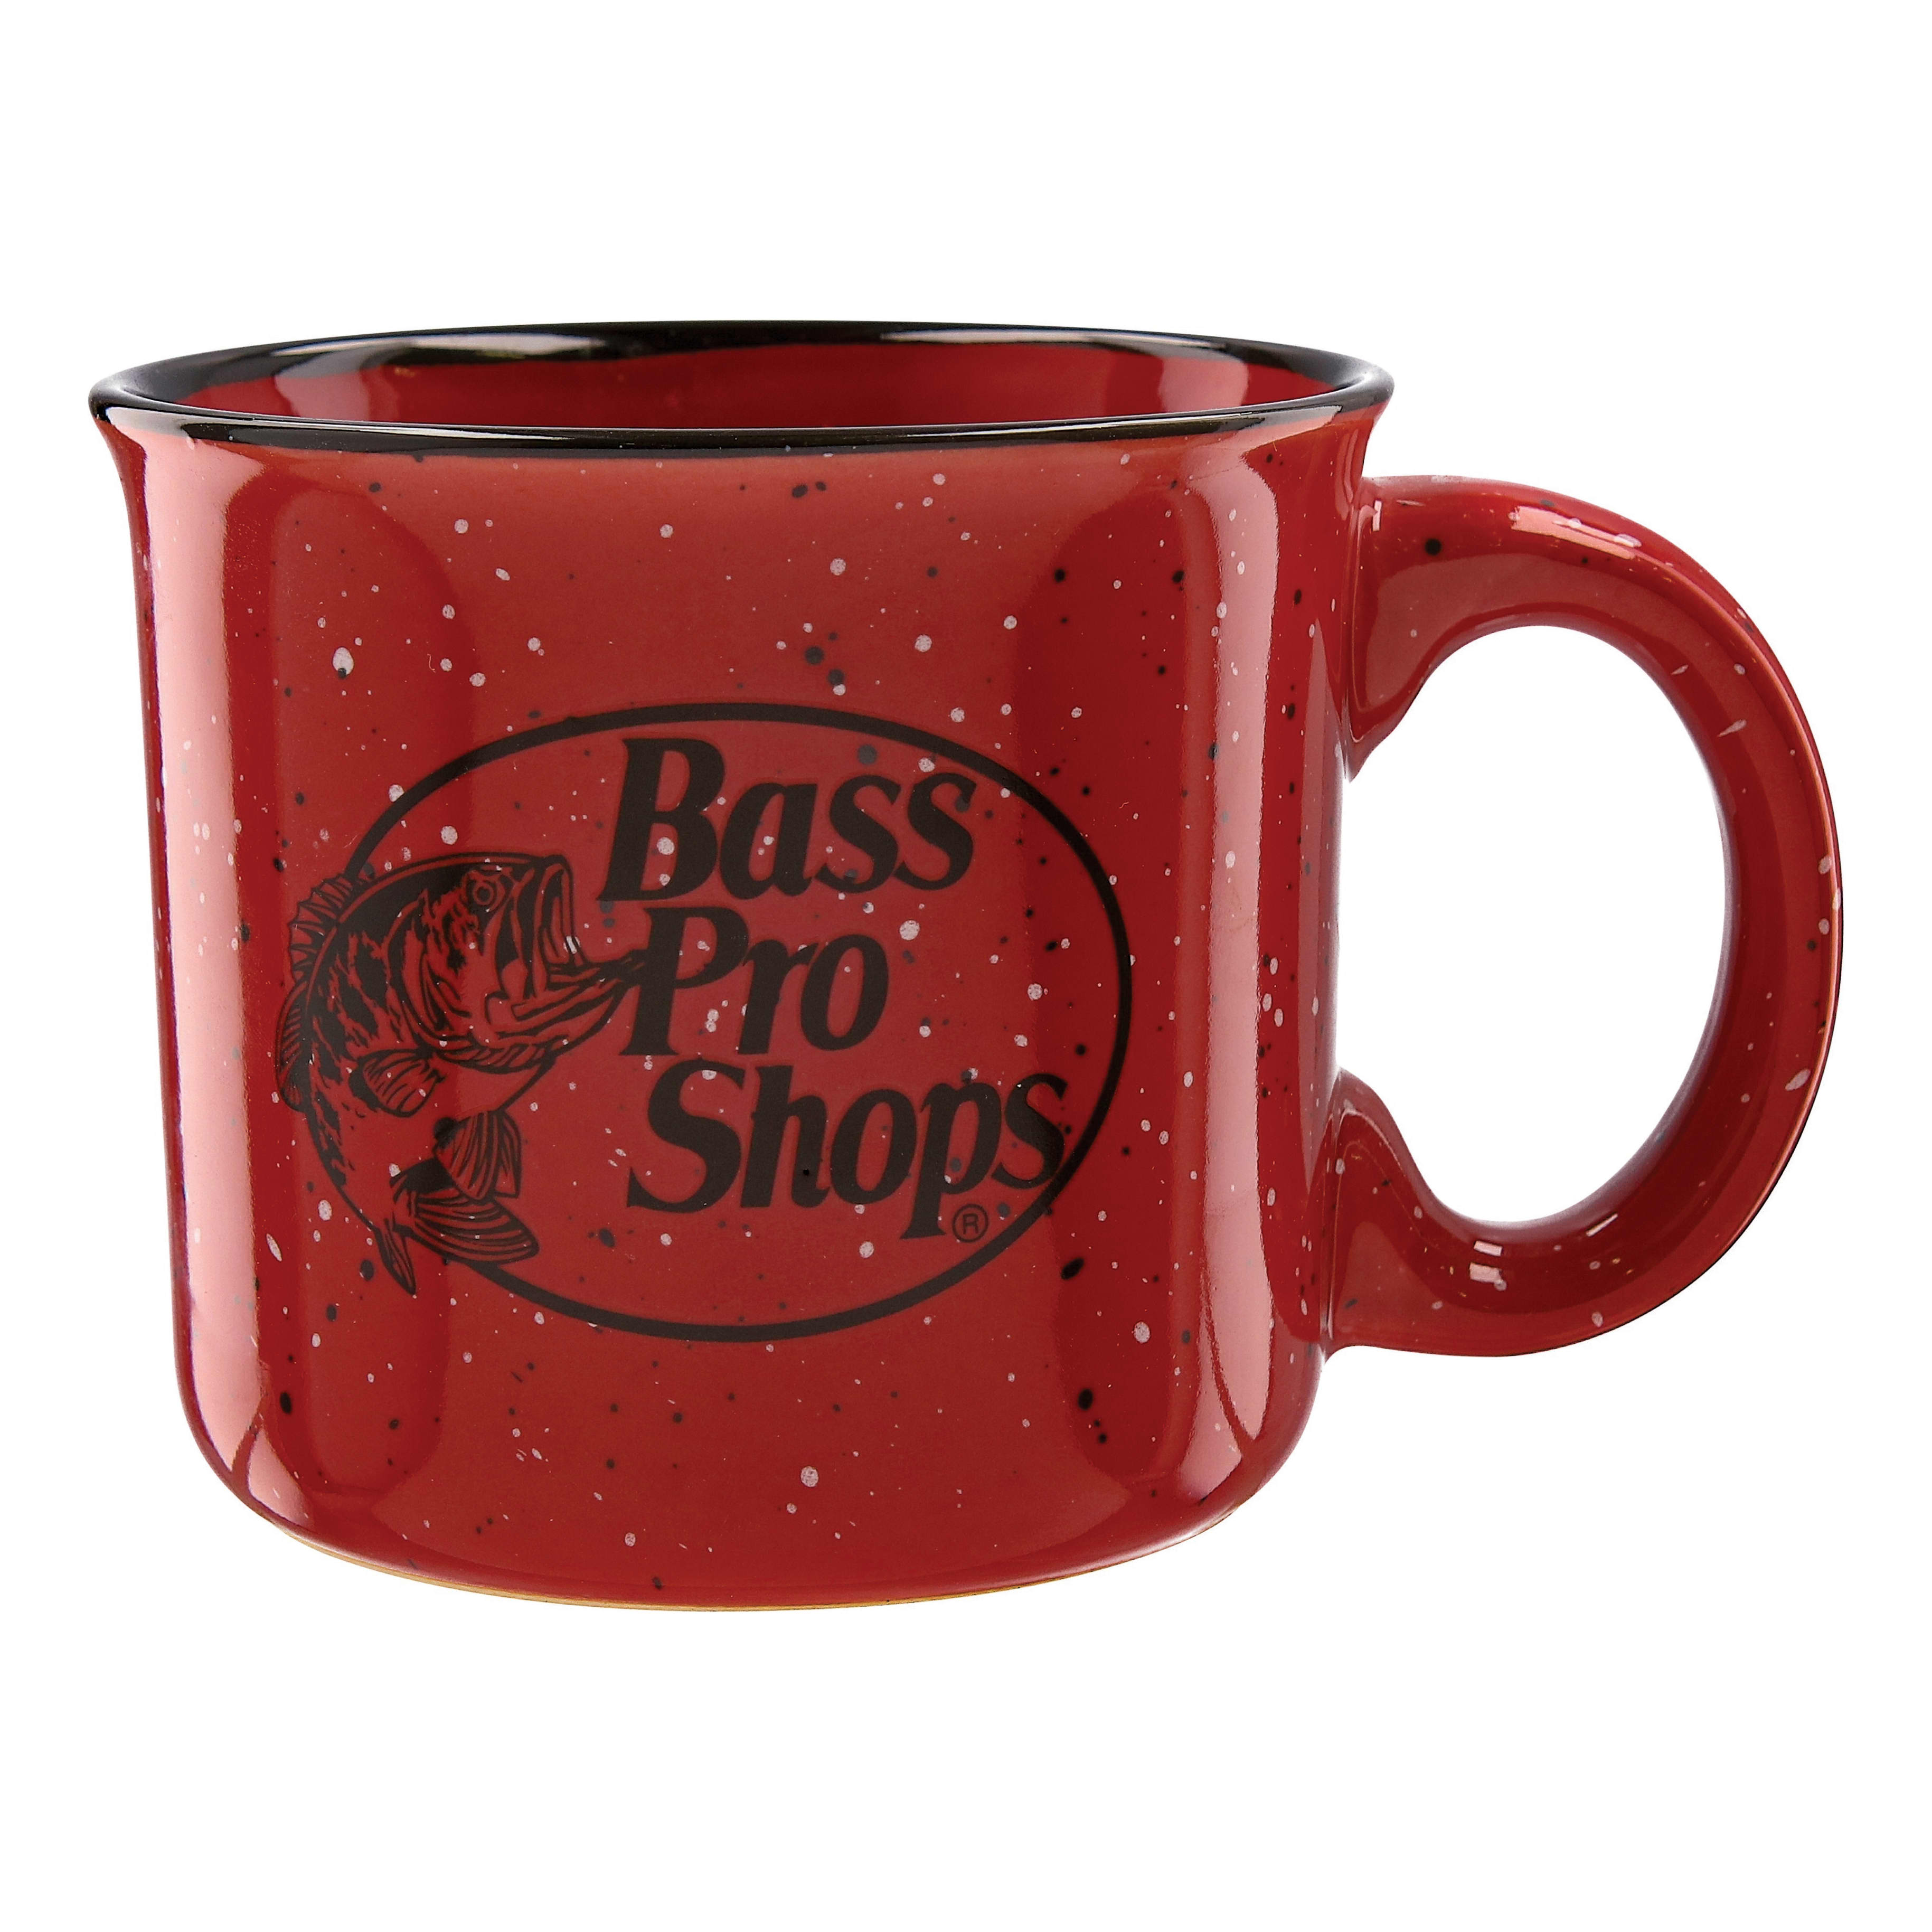 Bass Pro Shops Camp Mug - Red